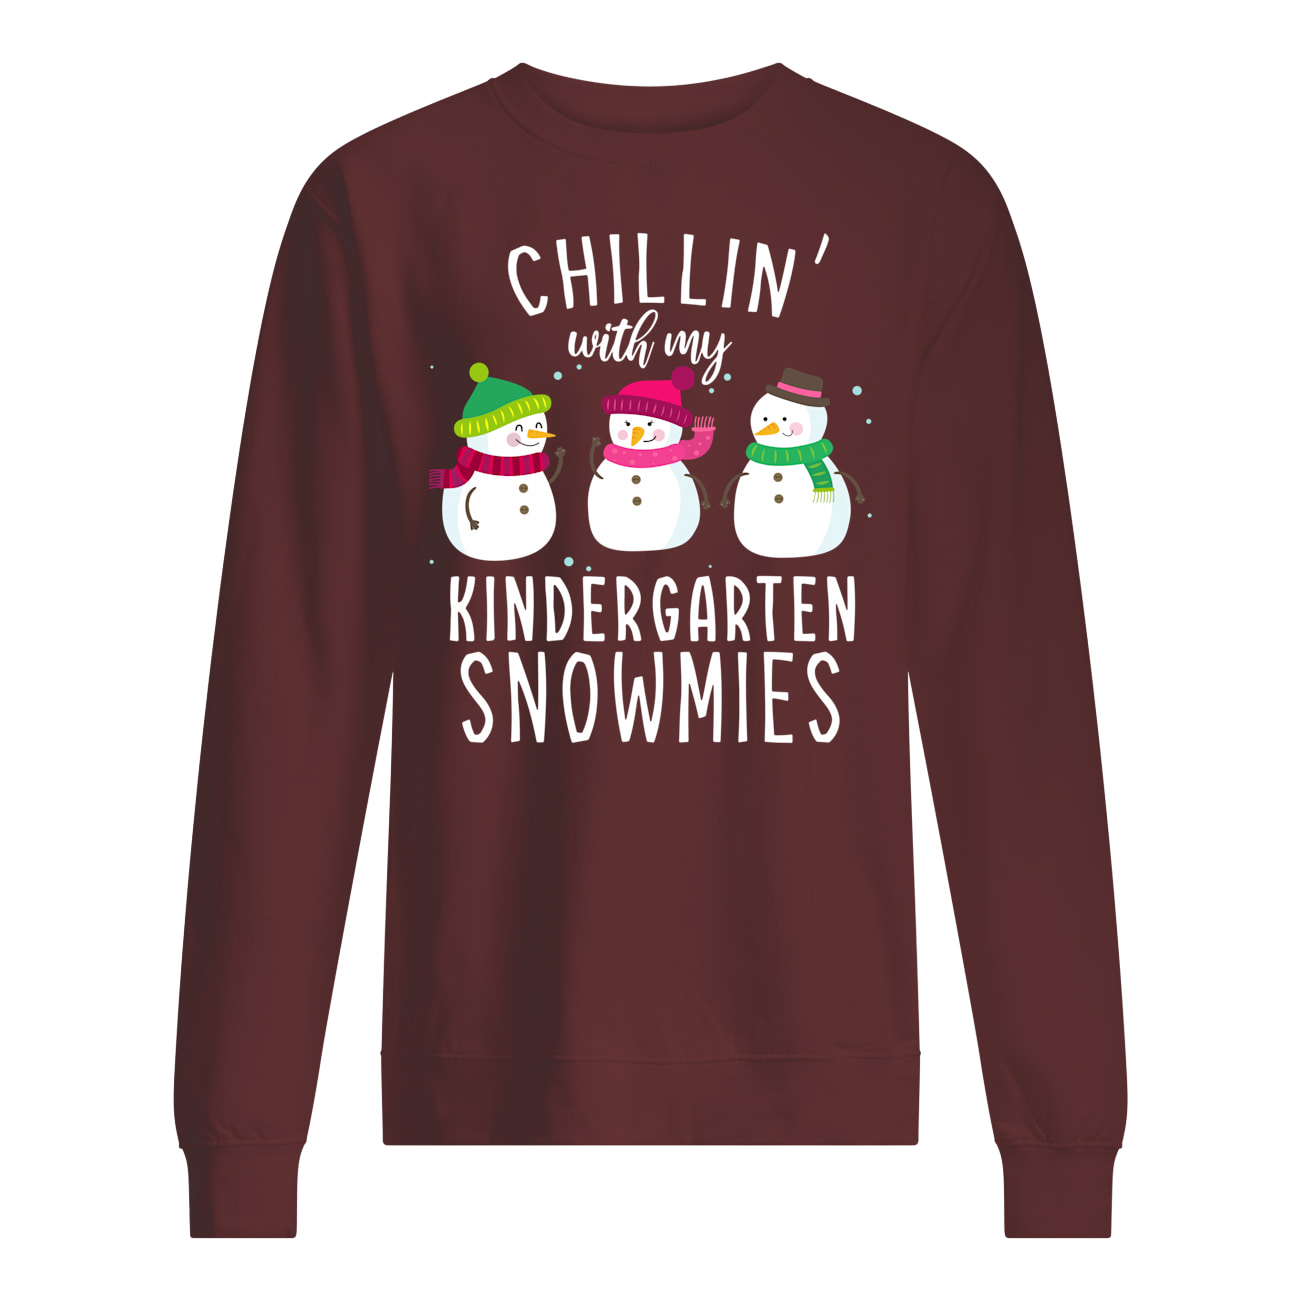 Chillin' with my kindergarten snowmies christmas sweatshirt